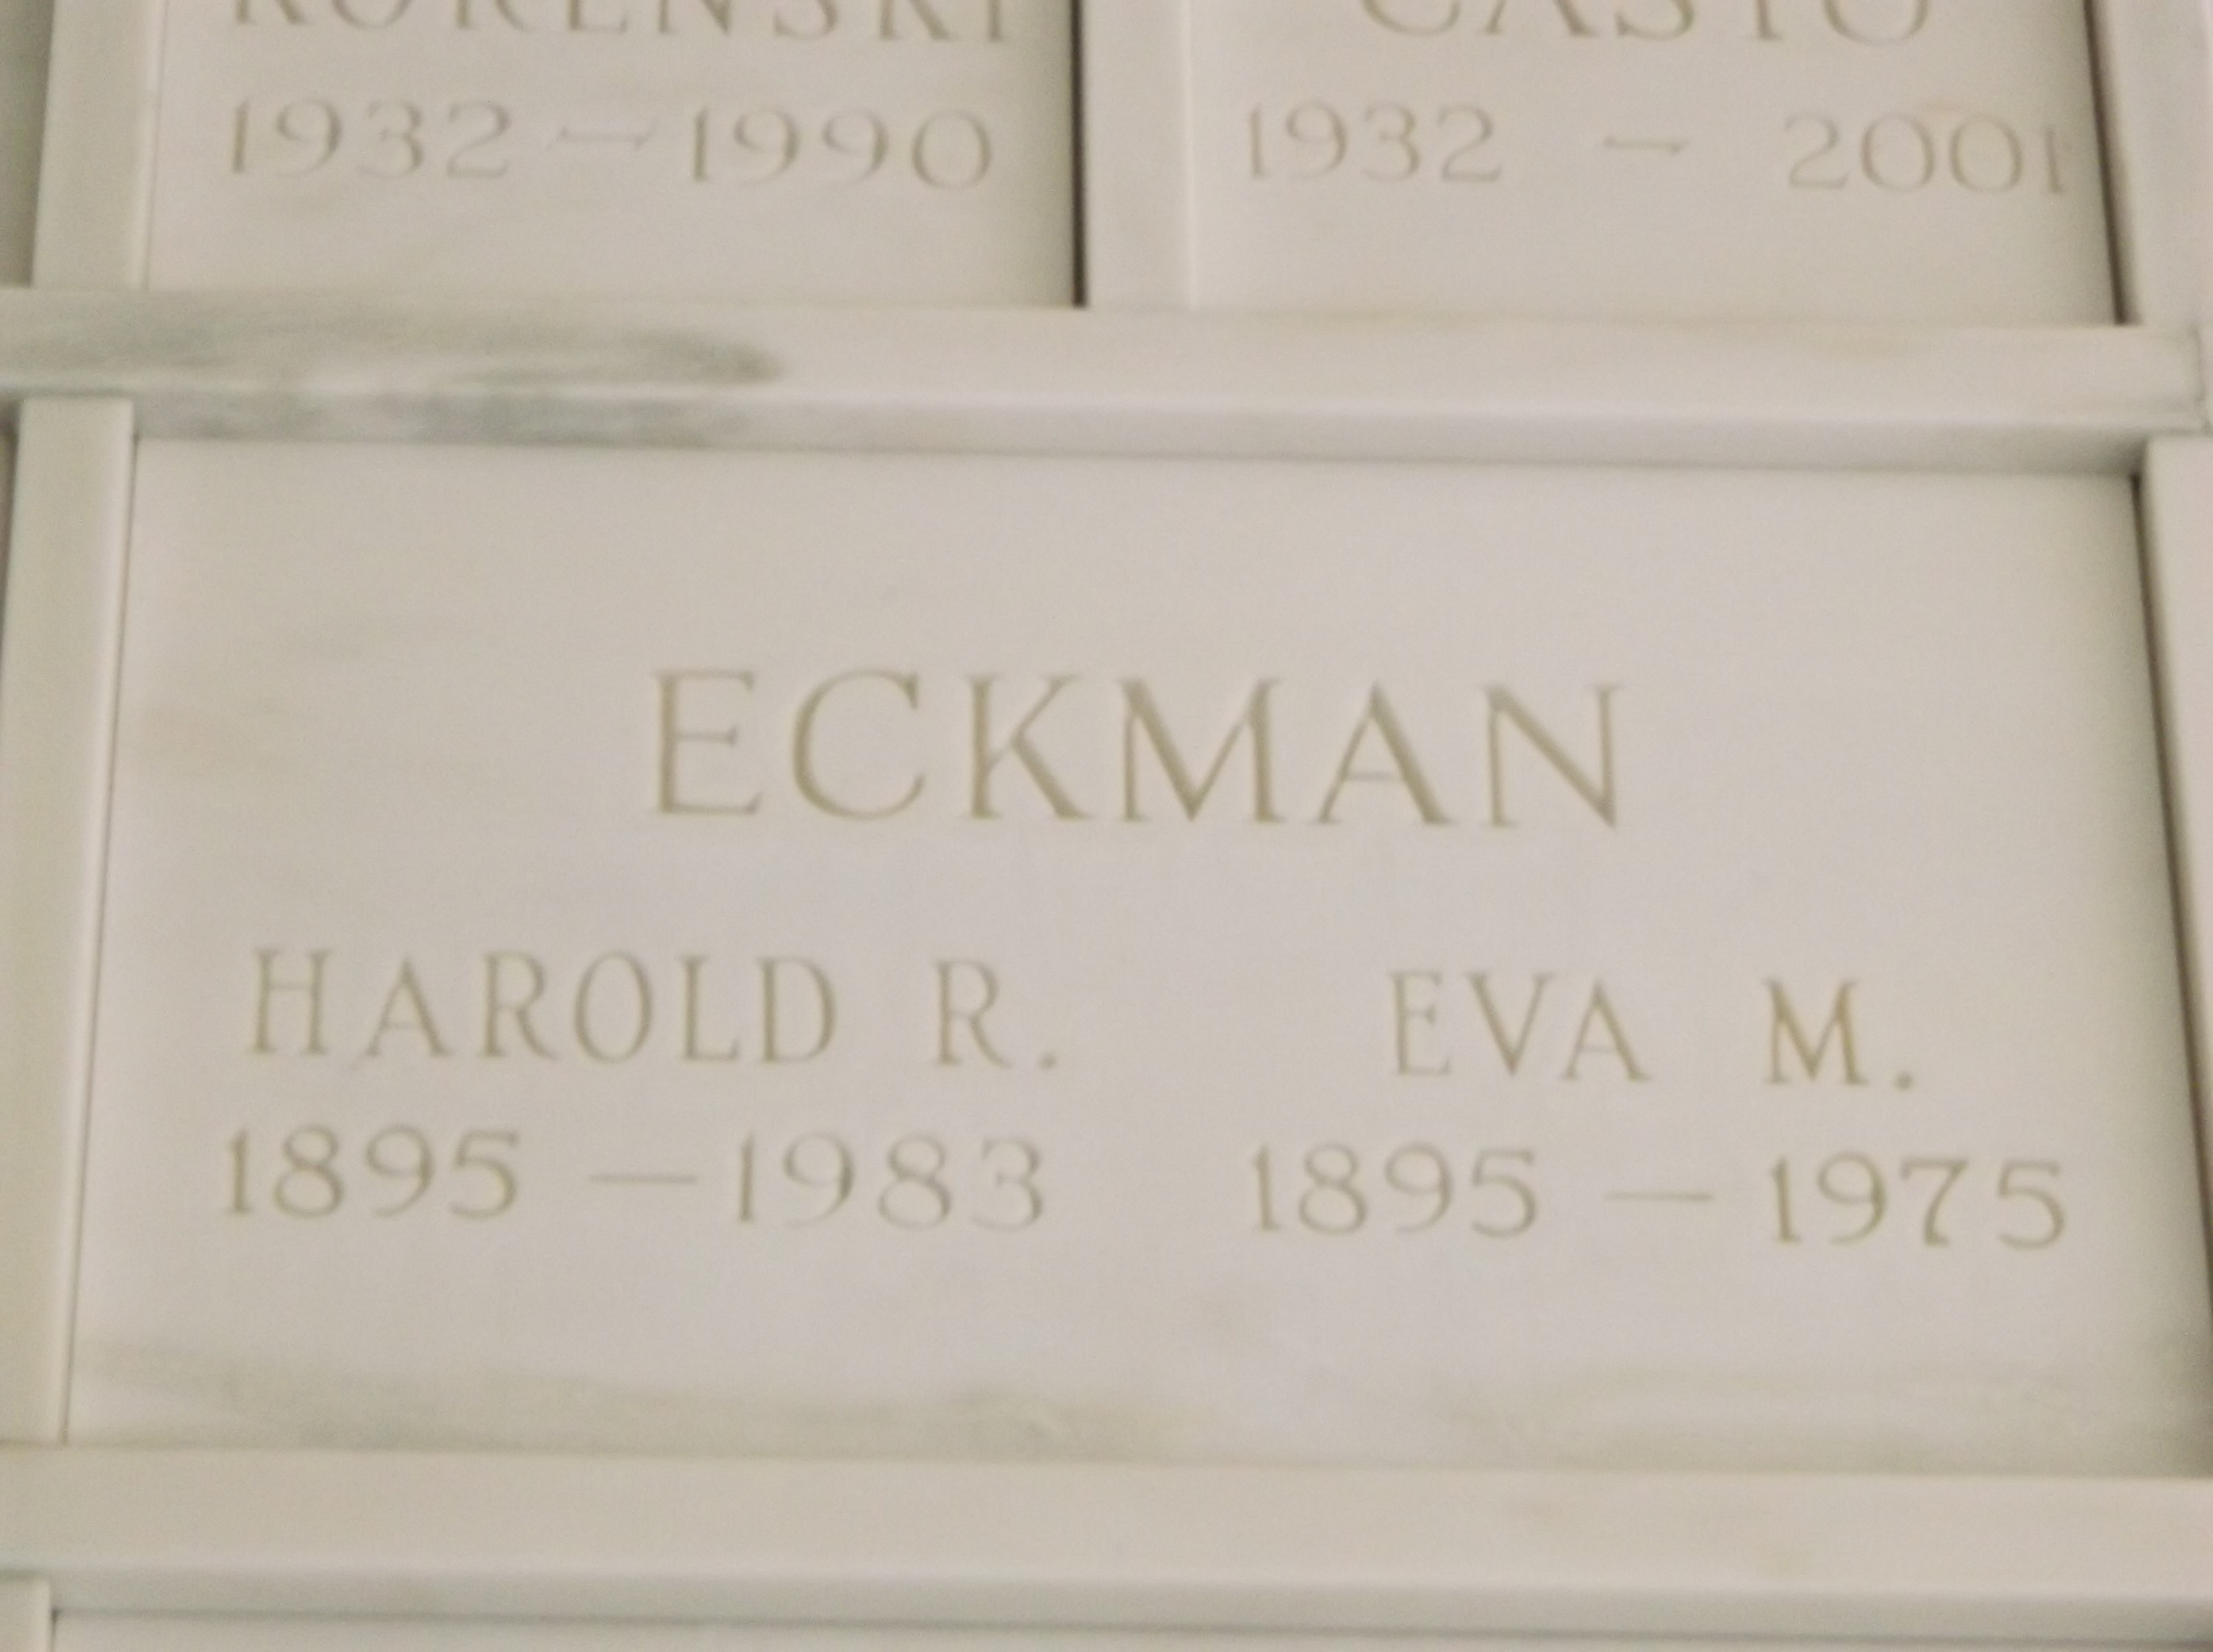 Eva M Eckman